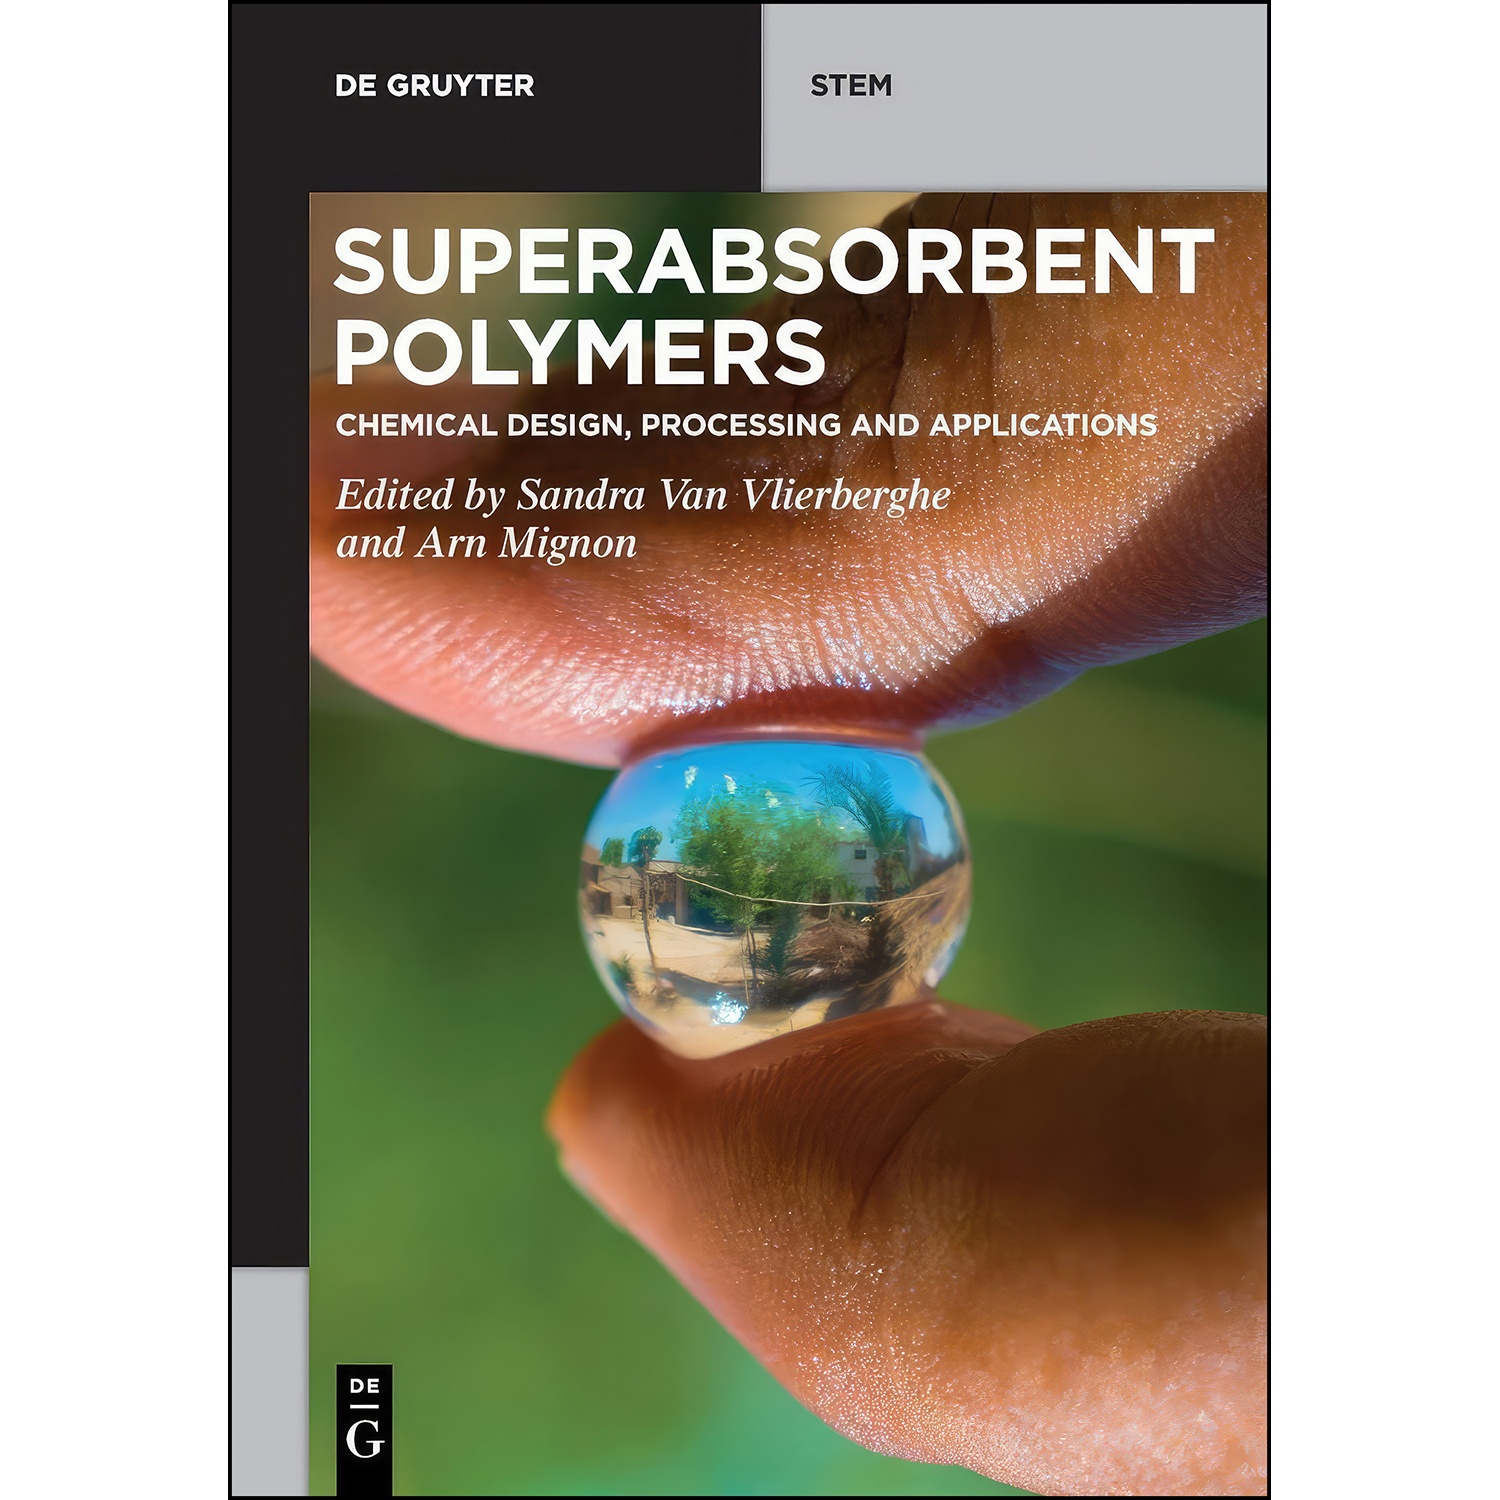 کتاب Superabsorbent Polymers اثر جمعي از نويسندگان انتشارات De Gruyter